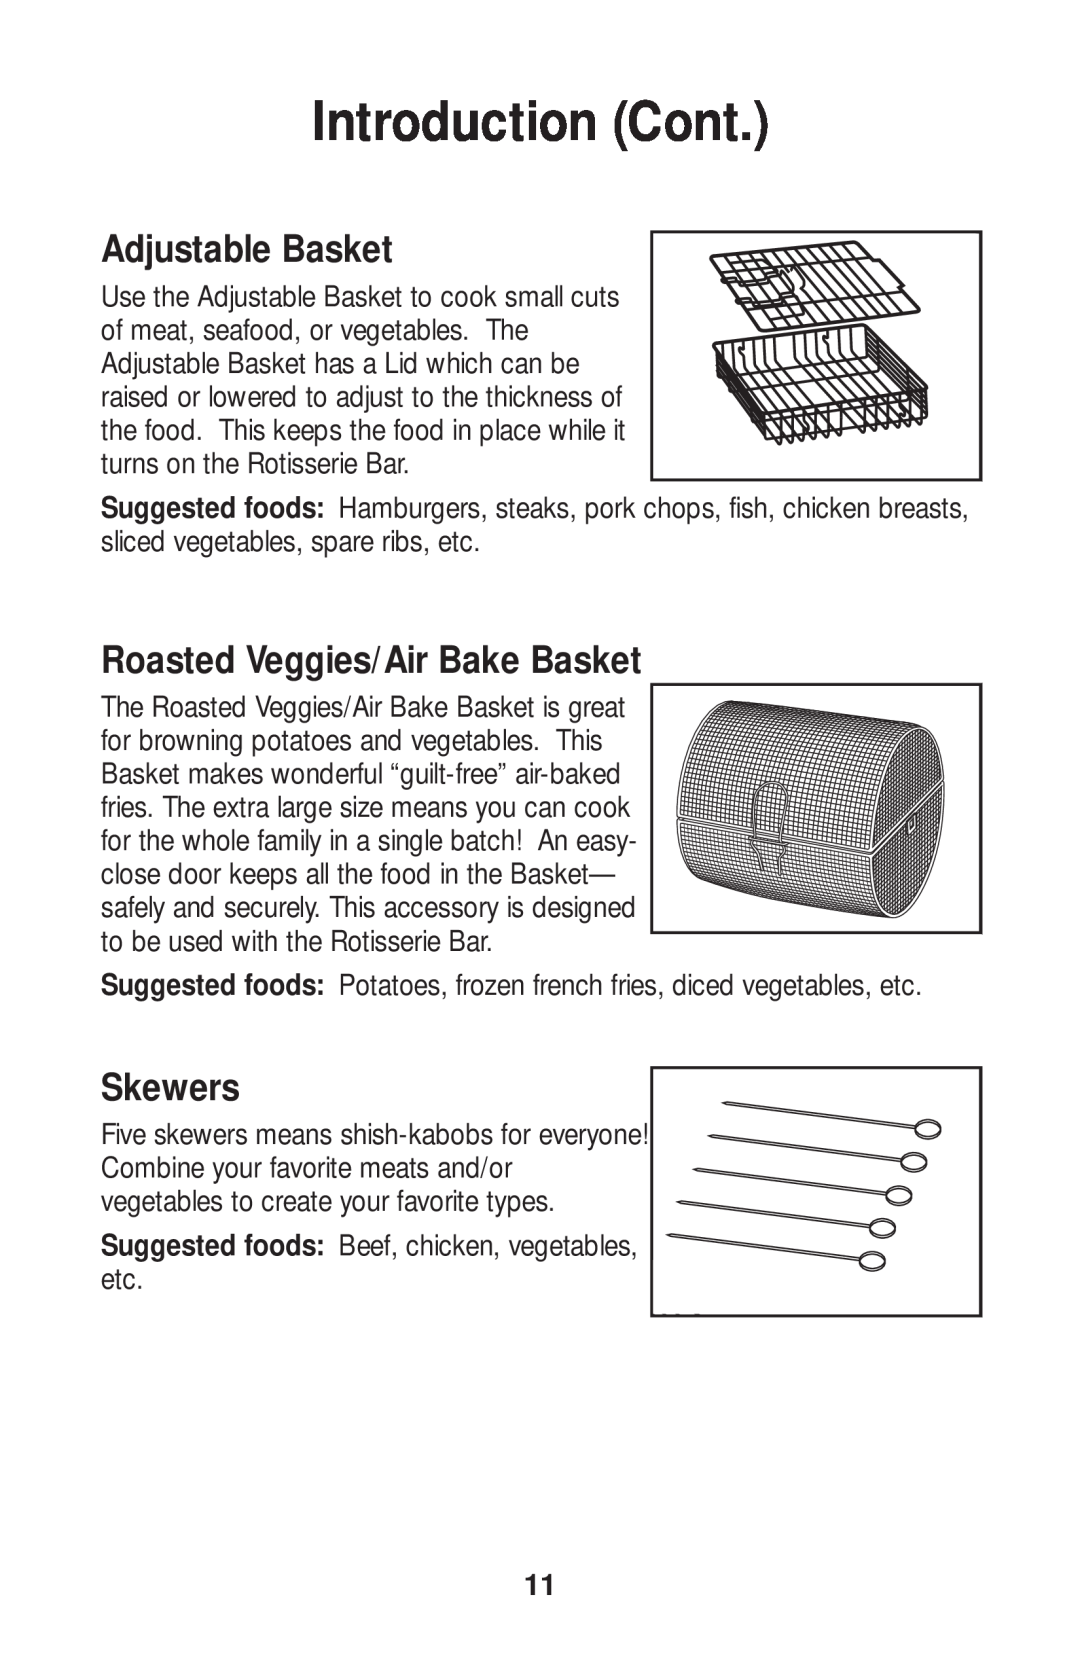 Salton GR80B owner manual Adjustable Basket, Roasted Veggies/Air Bake Basket, Skewers, Introduction Cont 